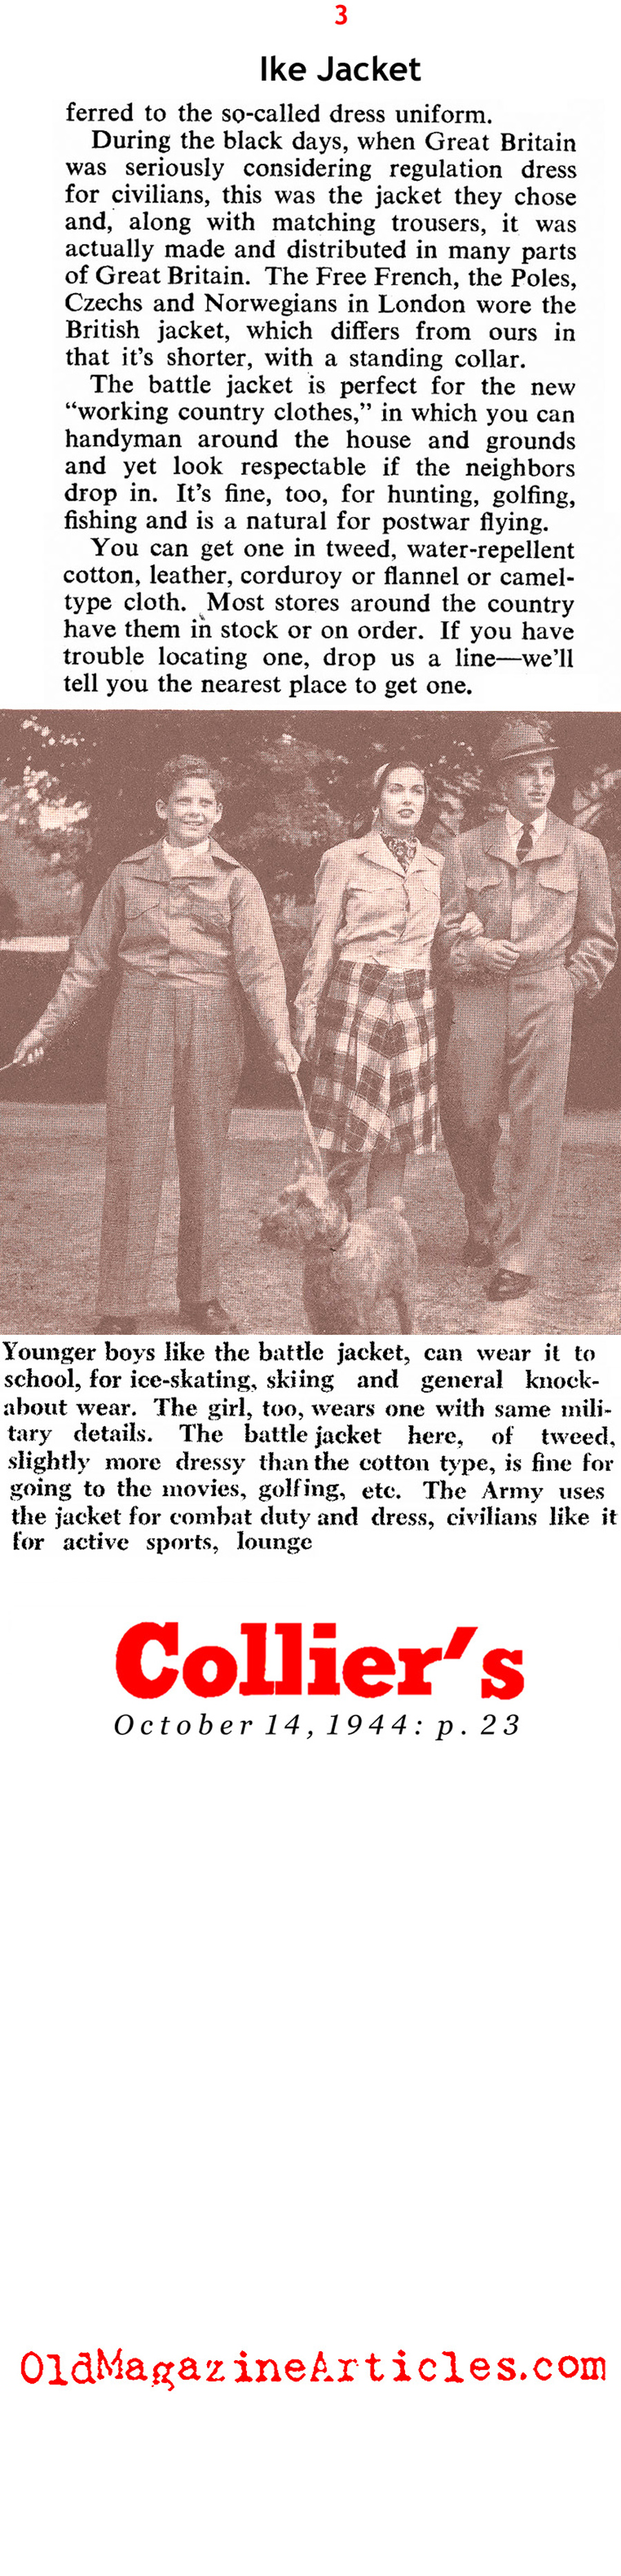 The Ike Jacket Goes Mainstream (Collier's Magazine, 1944)